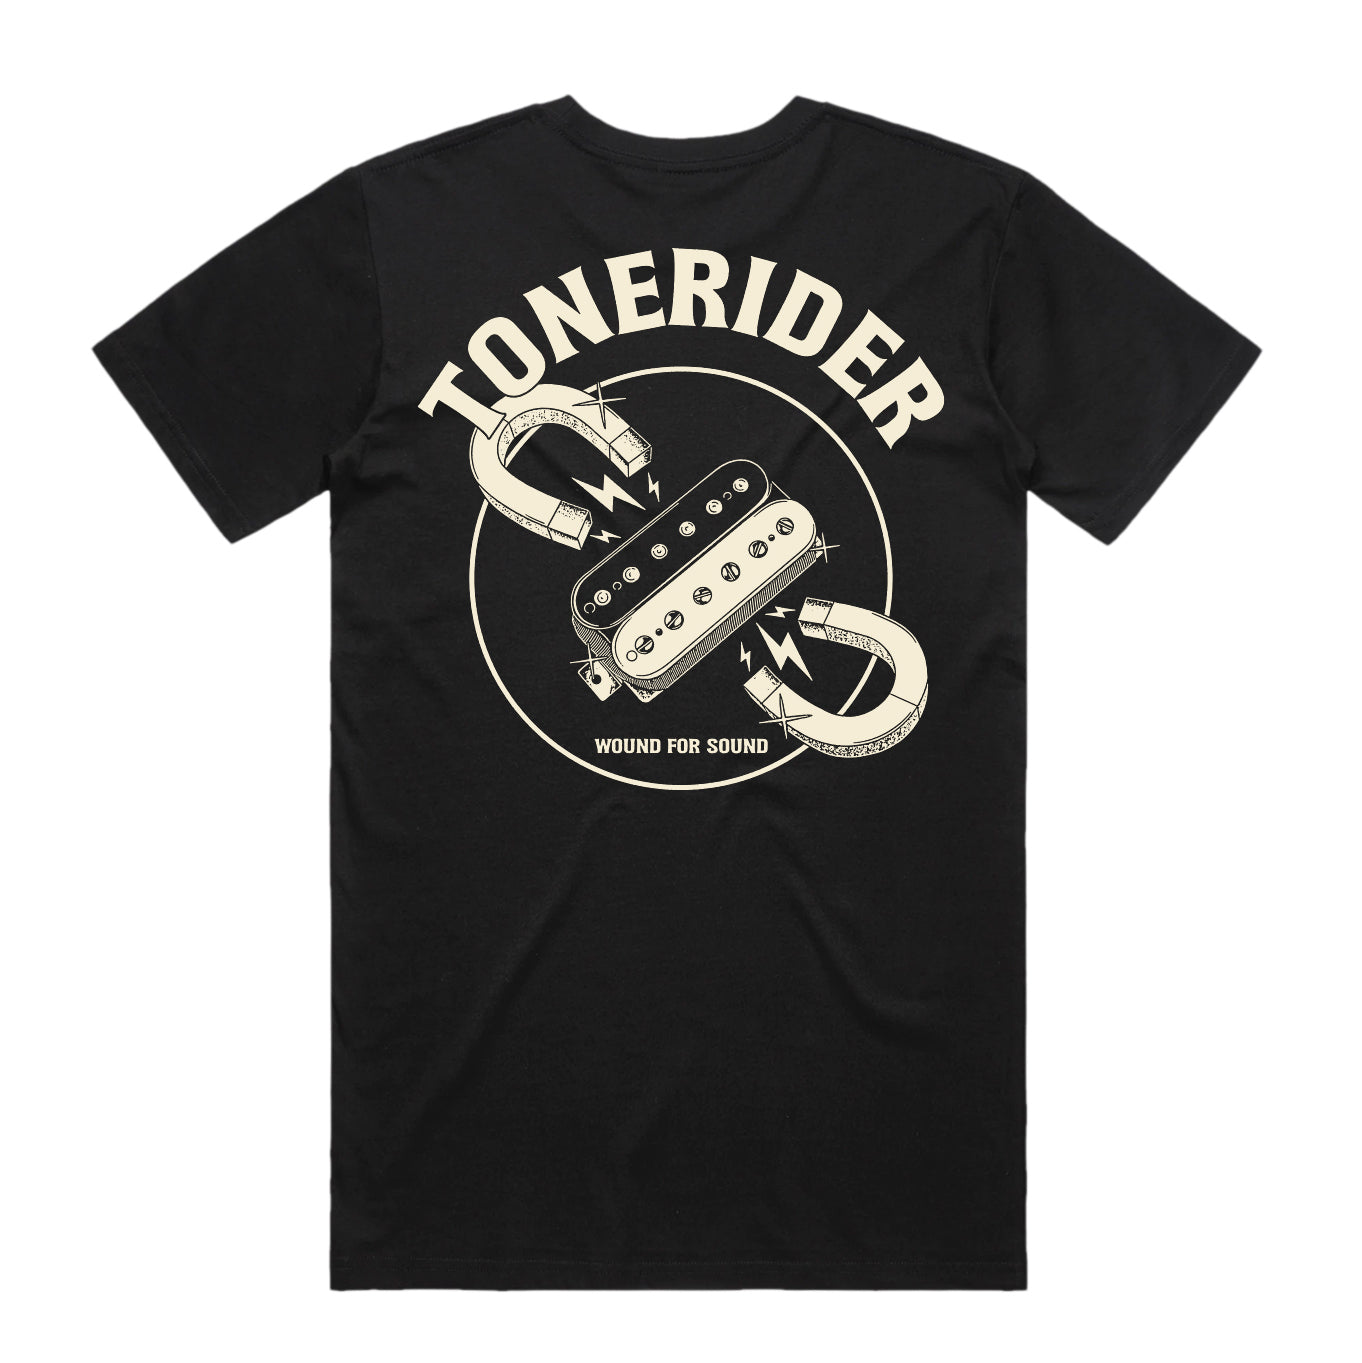 Tonerider 'Humbucker' T-shirt